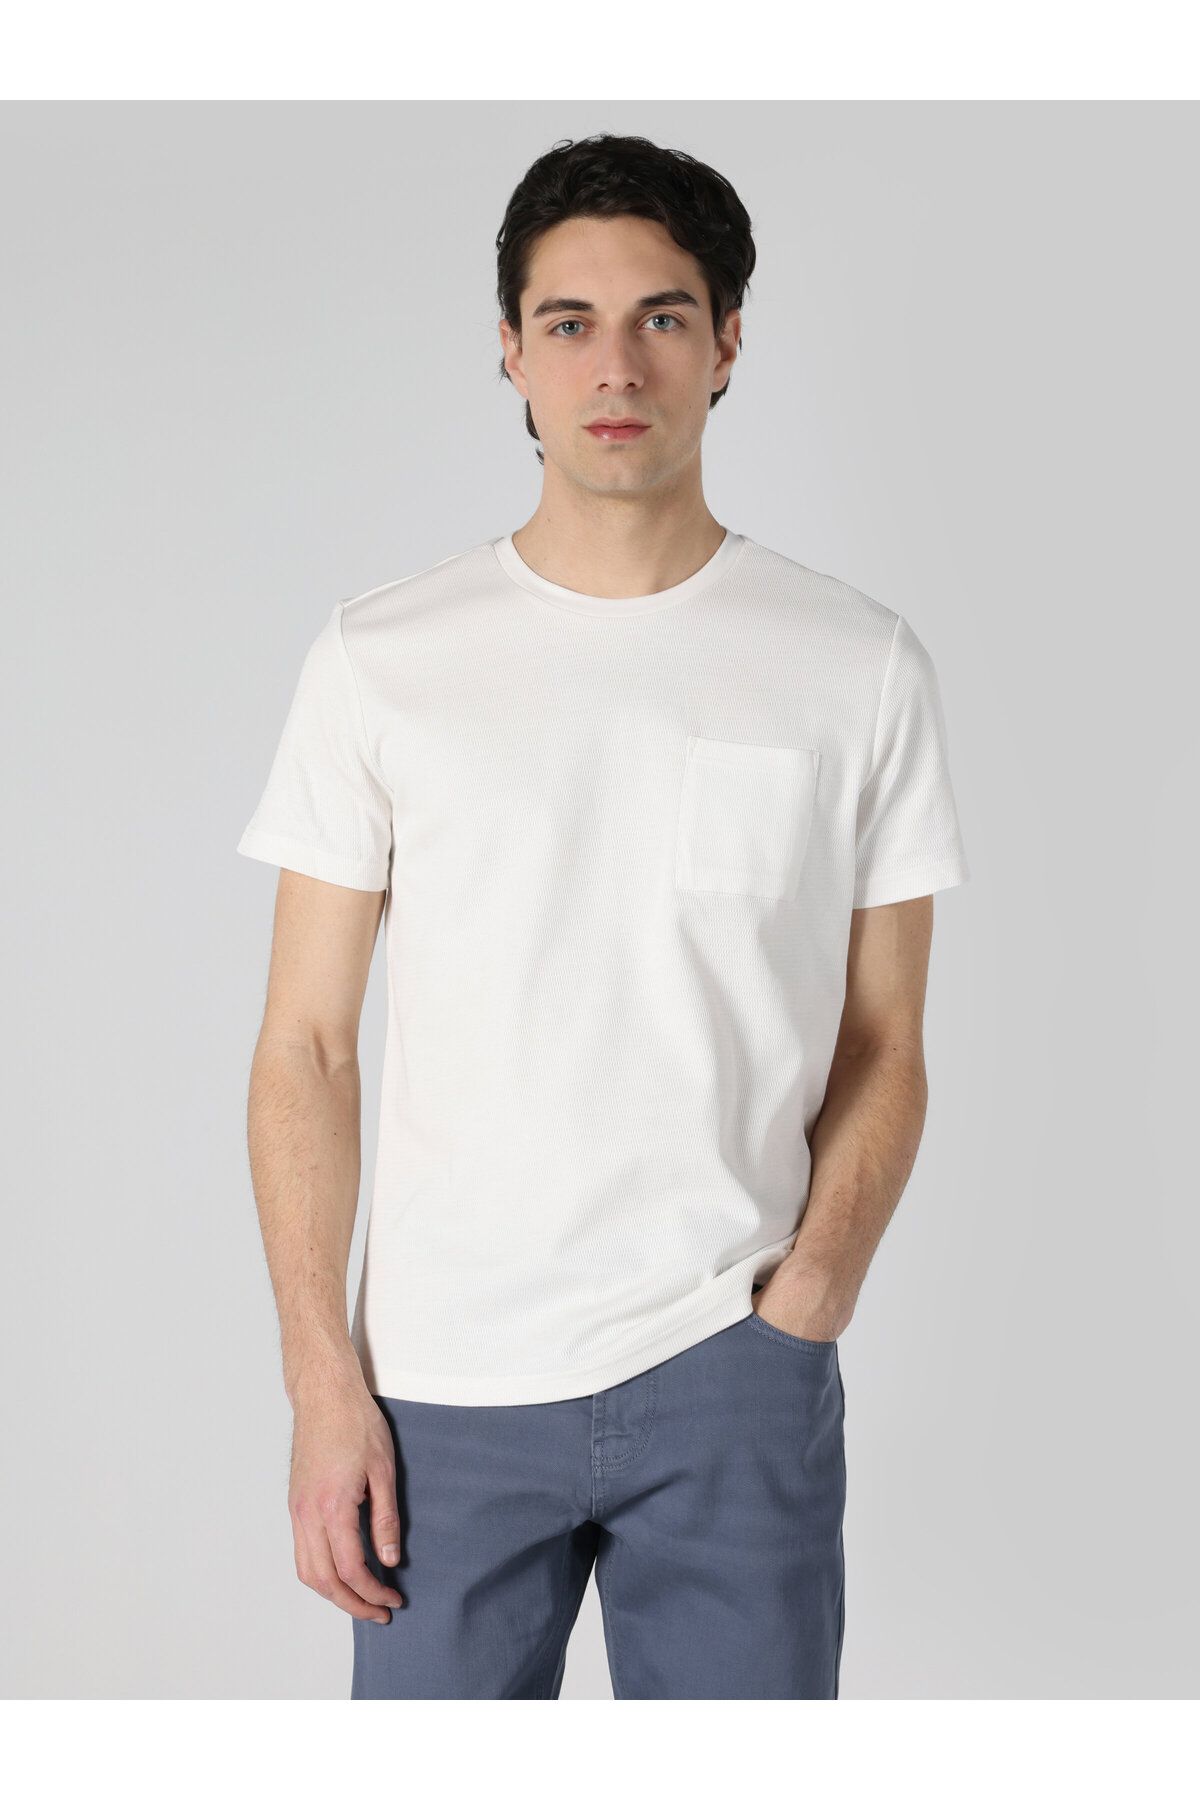 Colin’s مناسب و جیب اصلی سفید آستین کوتاه مردان T shirt